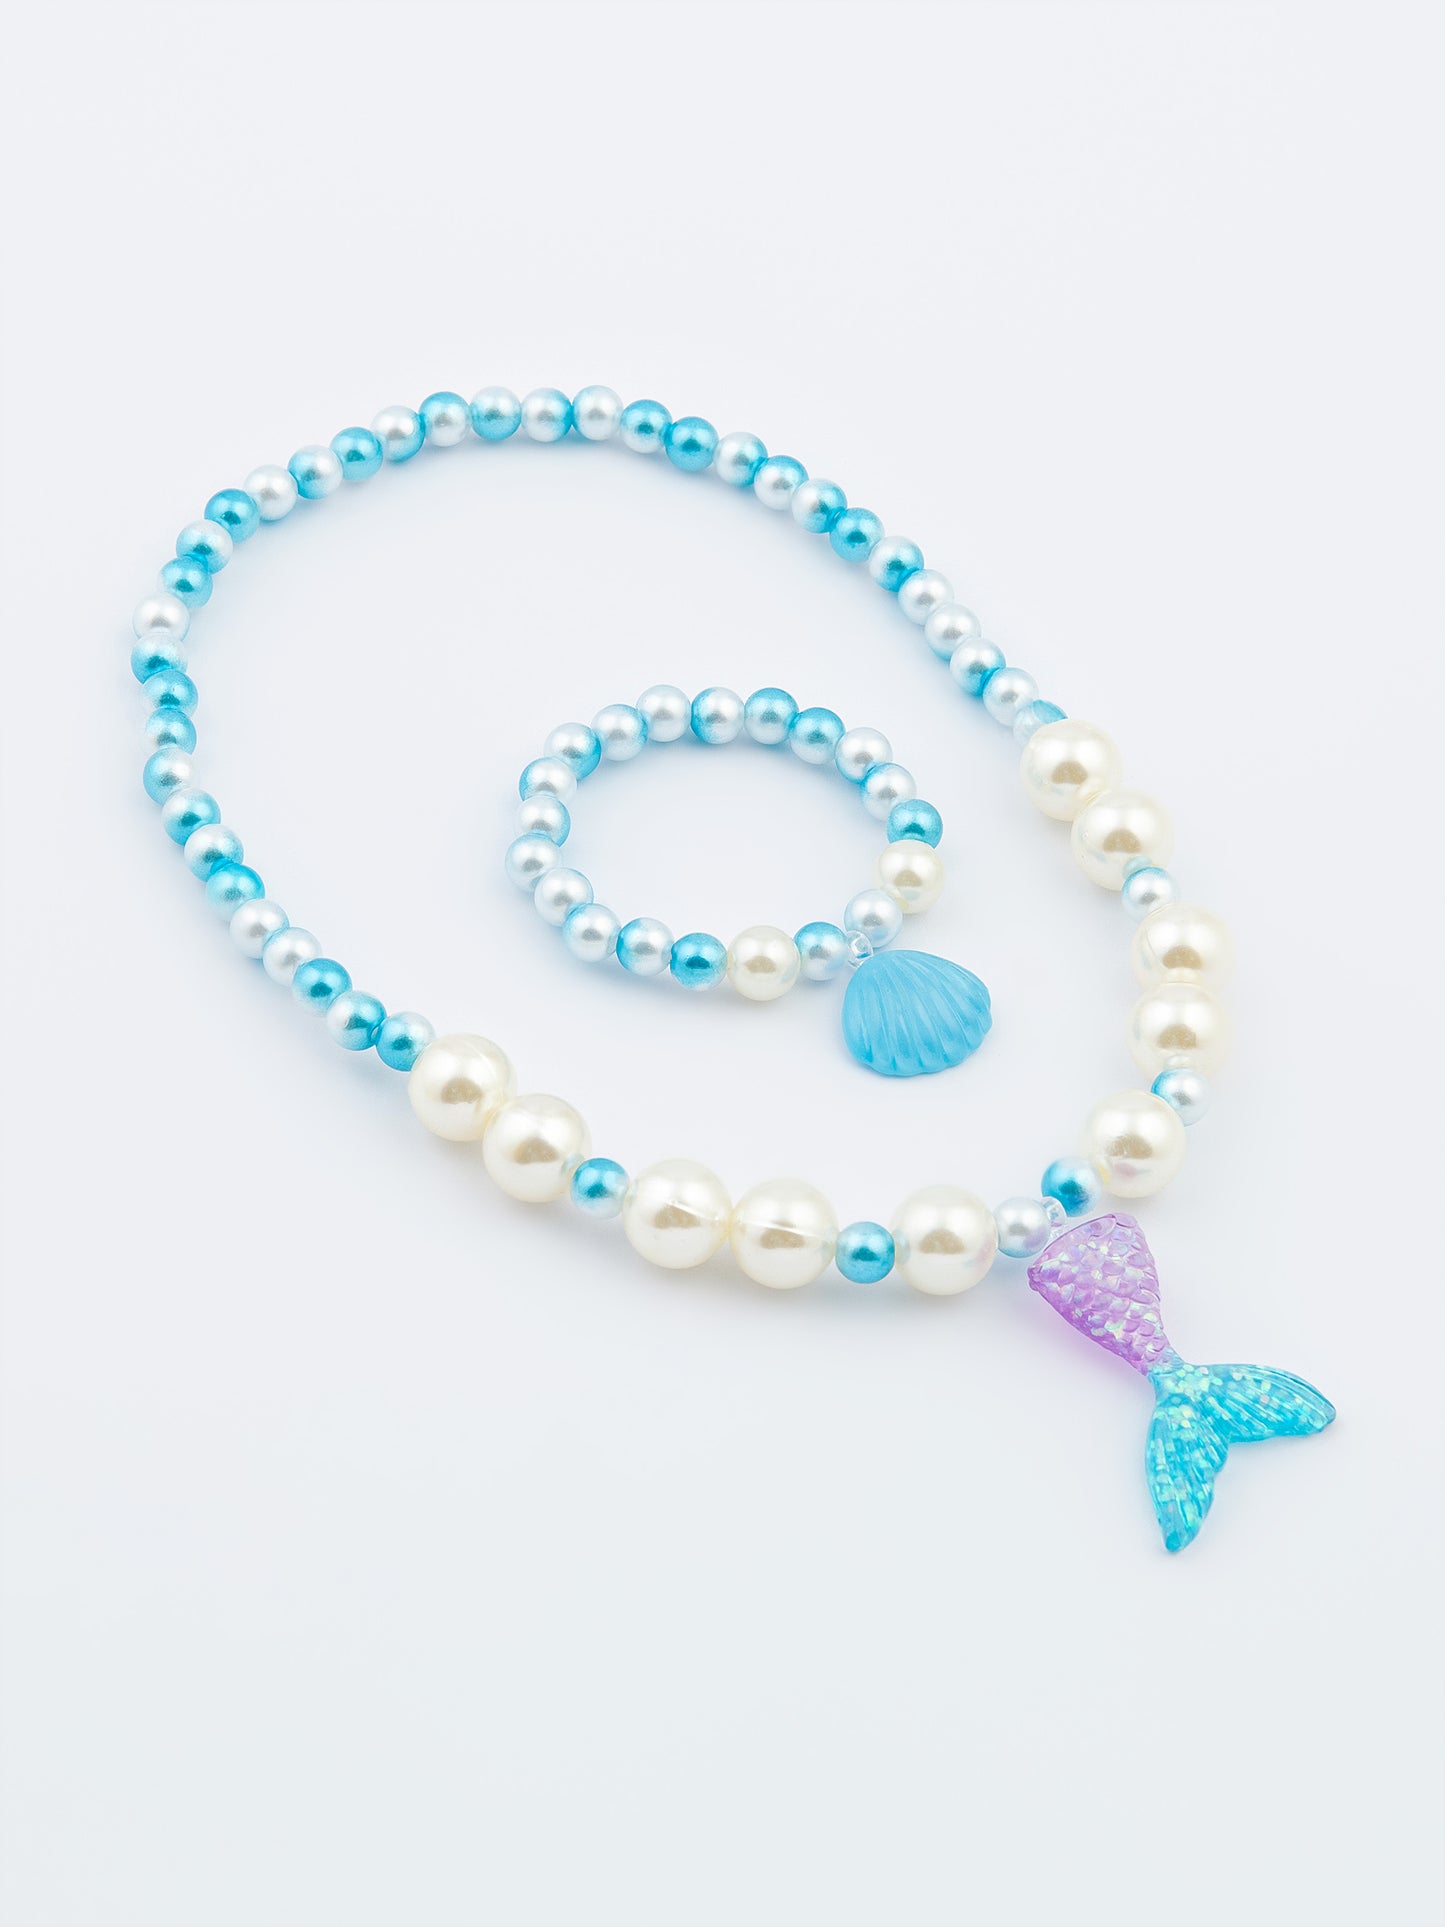 Mermaid Beaded Necklace and Bracelet Set